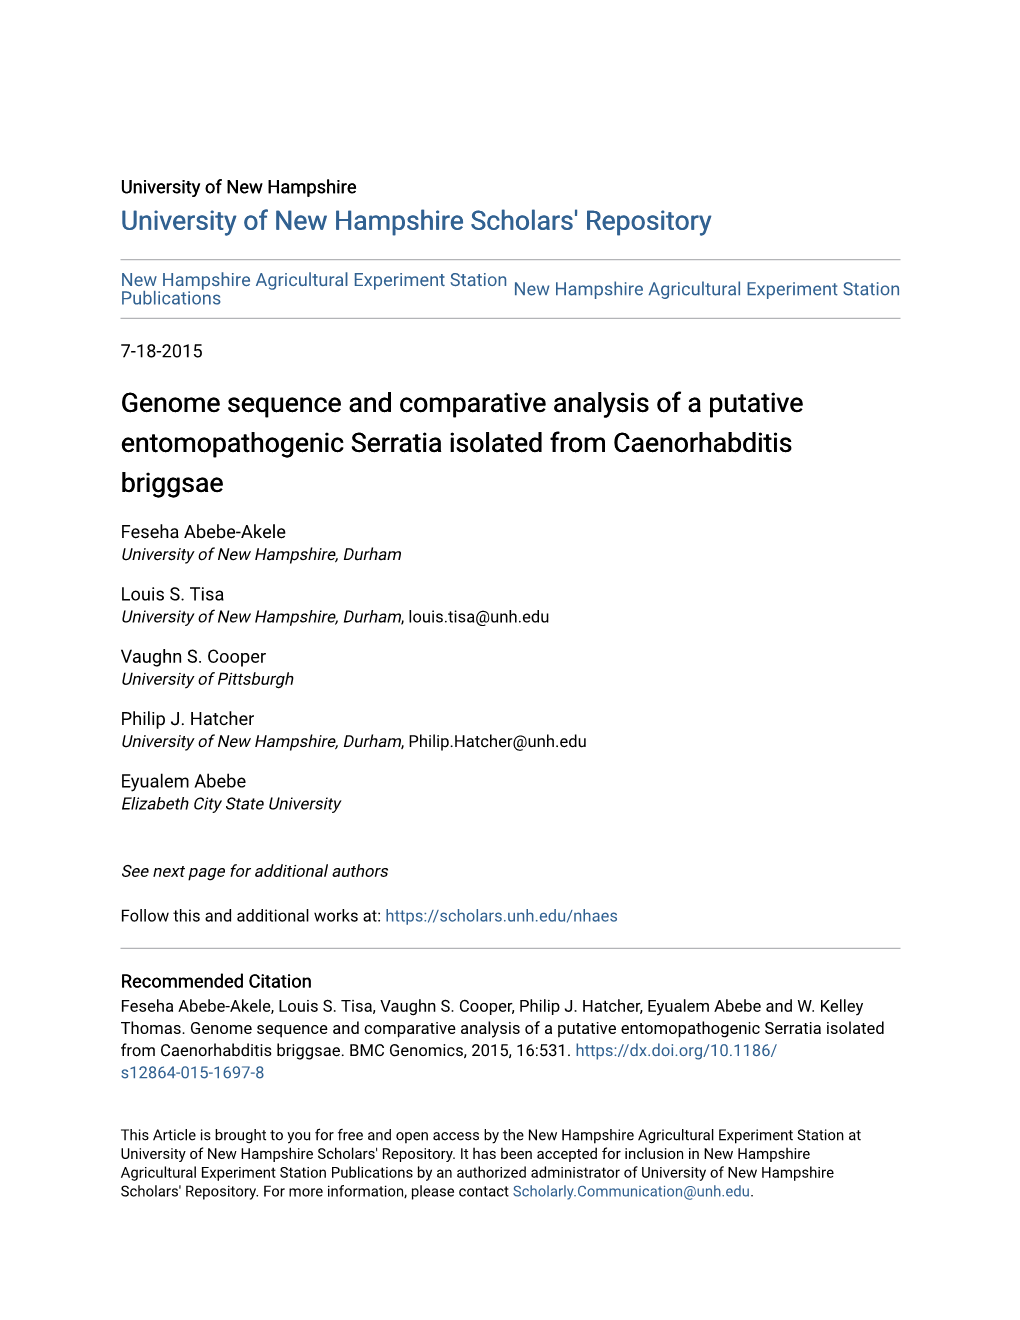 Genome Sequence and Comparative Analysis of a Putative Entomopathogenic Serratia Isolated from Caenorhabditis Briggsae